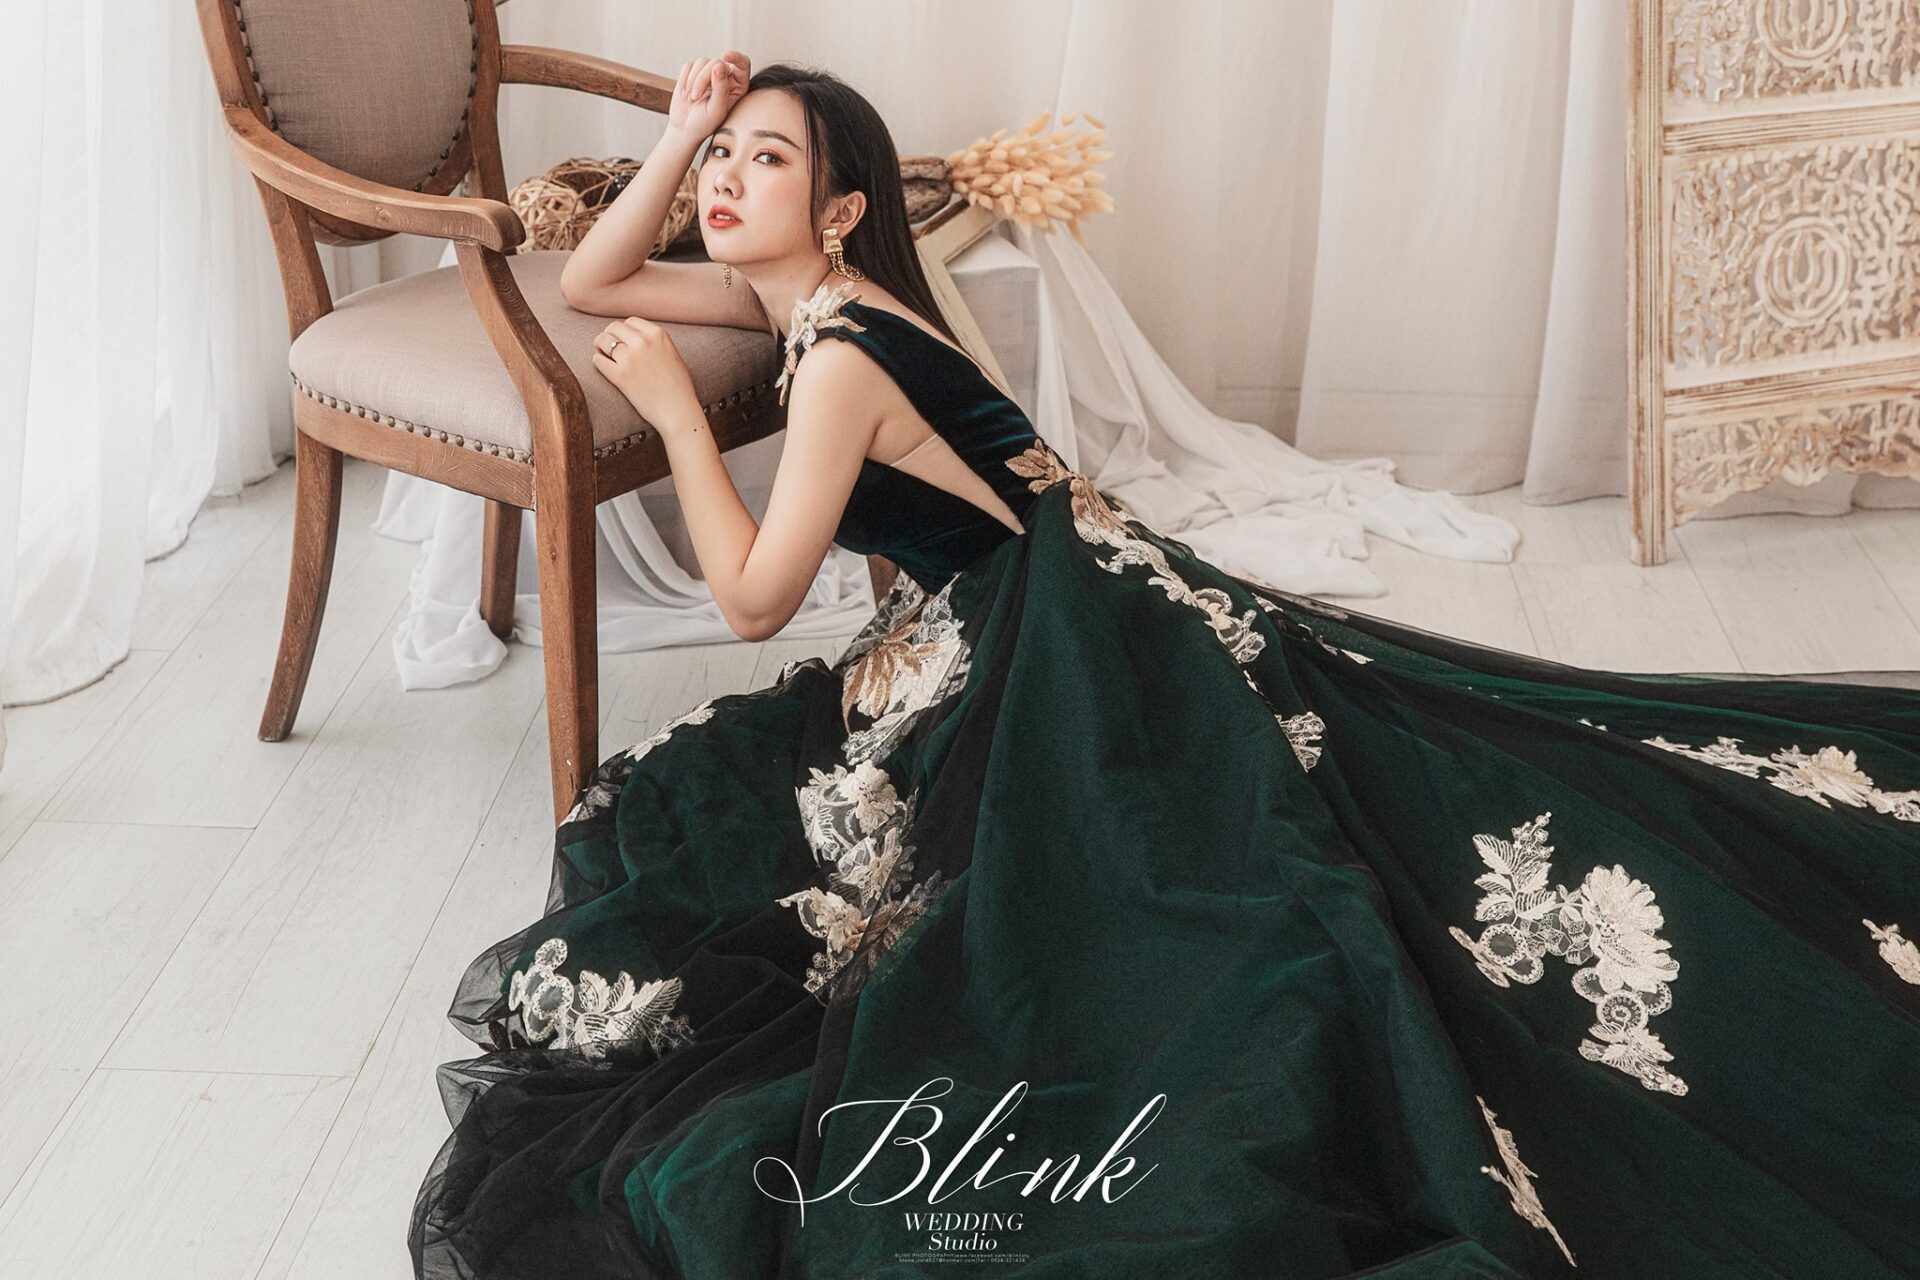 Blink studio / 舒驊＆柏志 婚紗照分享 | 愛情蔓延精緻婚紗 - 禮服出租 | 婚紗推薦 | 台中婚紗